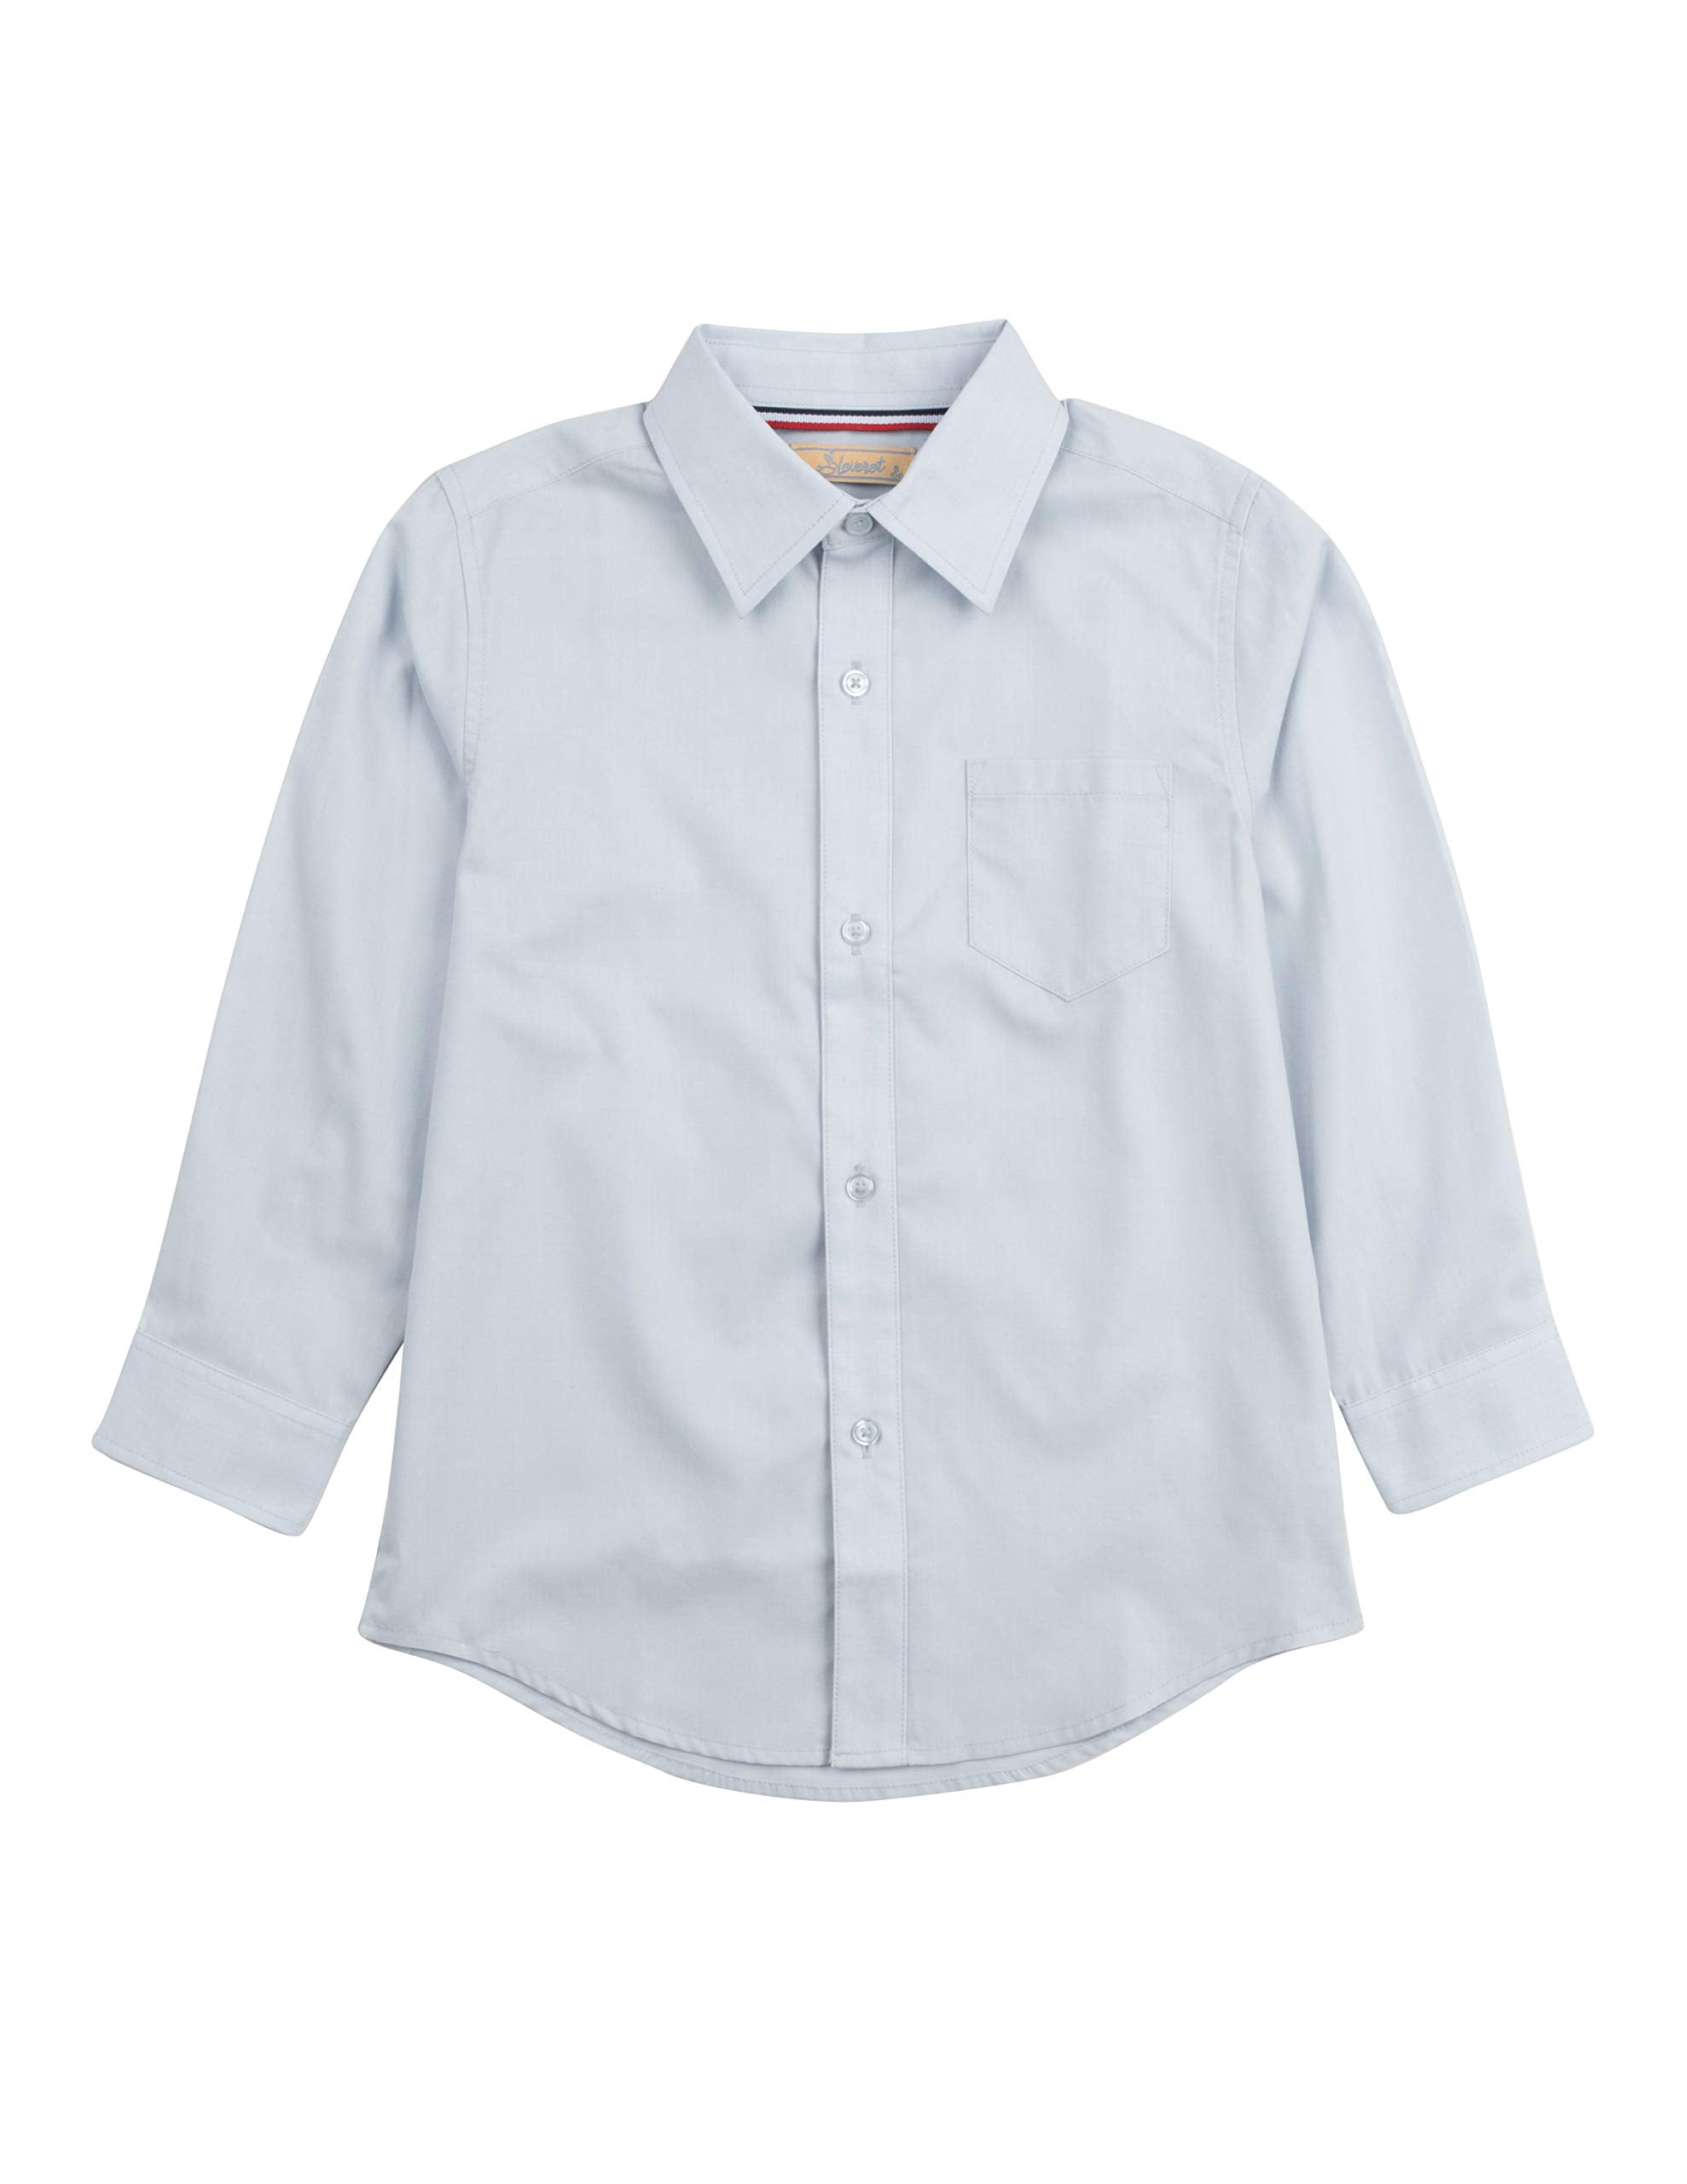 Dress Shirt Boys Children Kids Tie Solid Button Down Long Sleeve All Size 2T 3T 